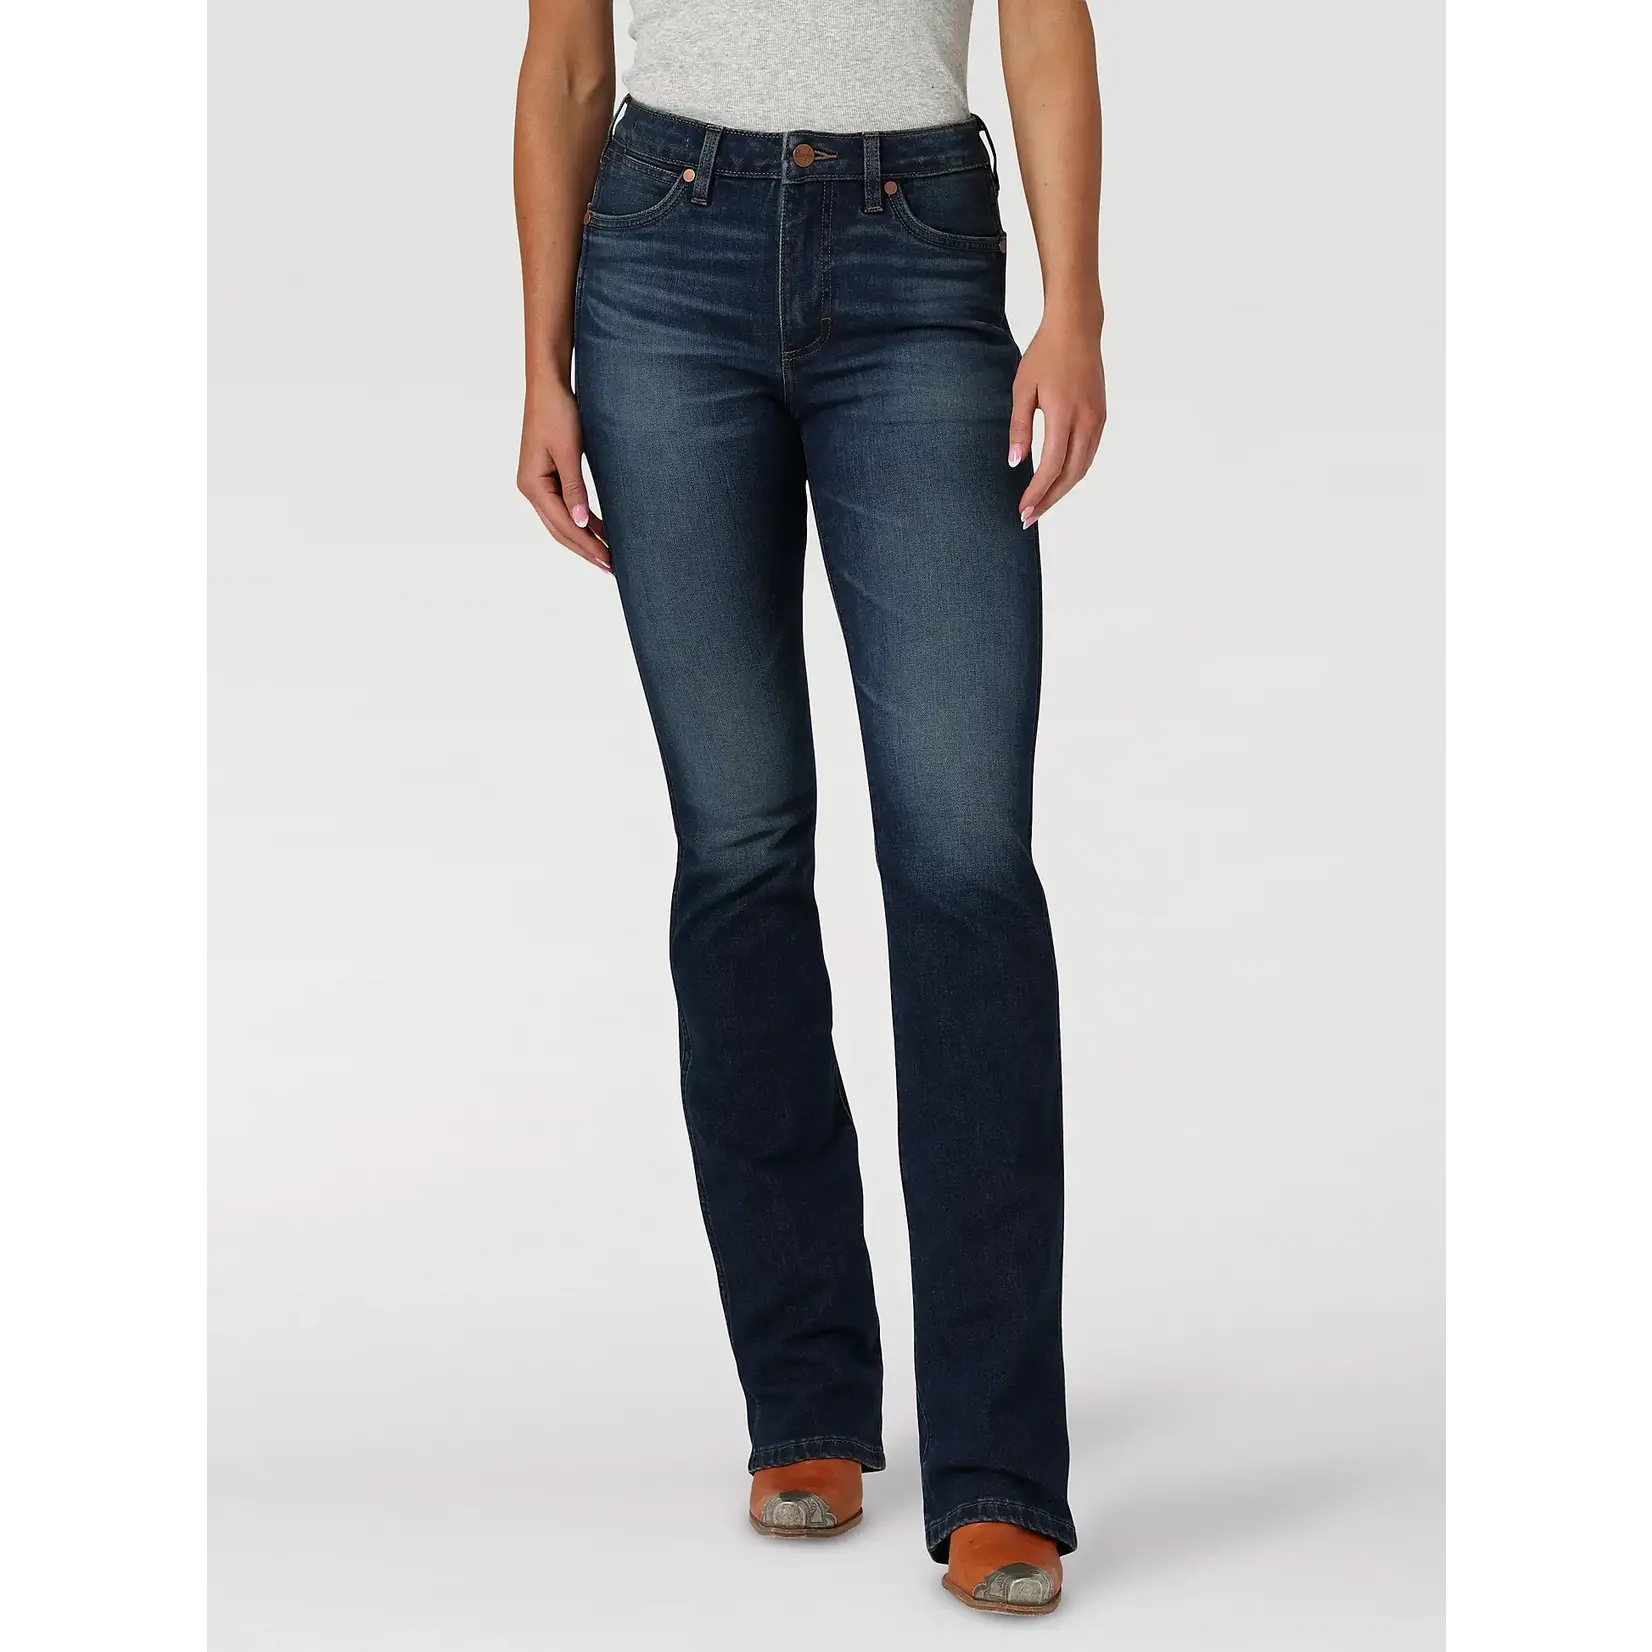 Wrangler Women's Retro Premium High Rise Slim Boot Jean - 112336707